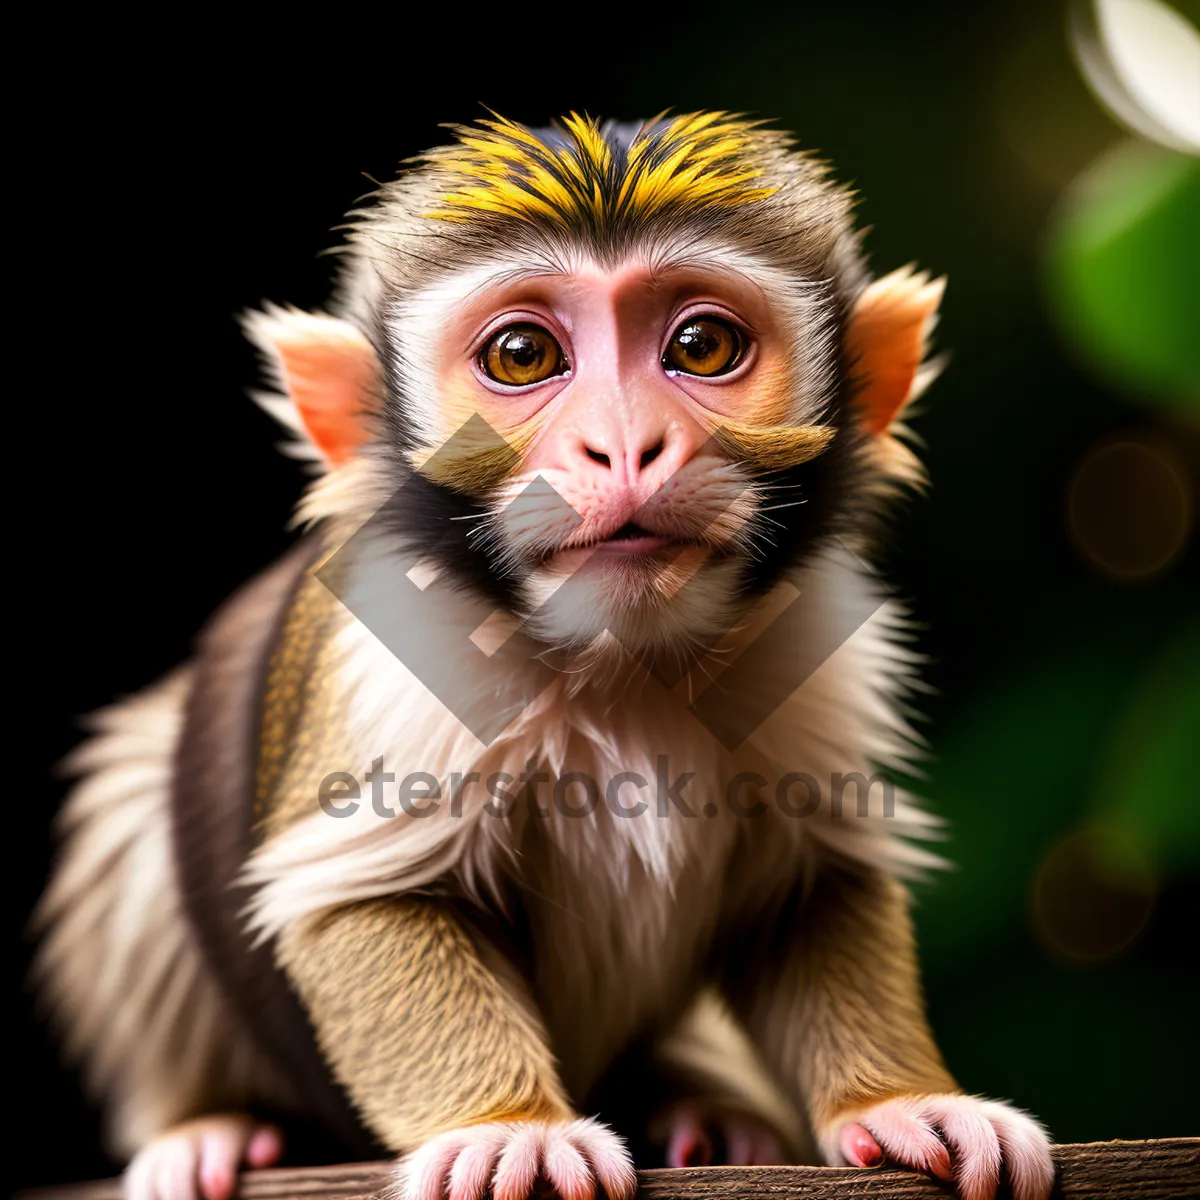 Picture of Cute Wild Monkey in Natural Jungle Habitat